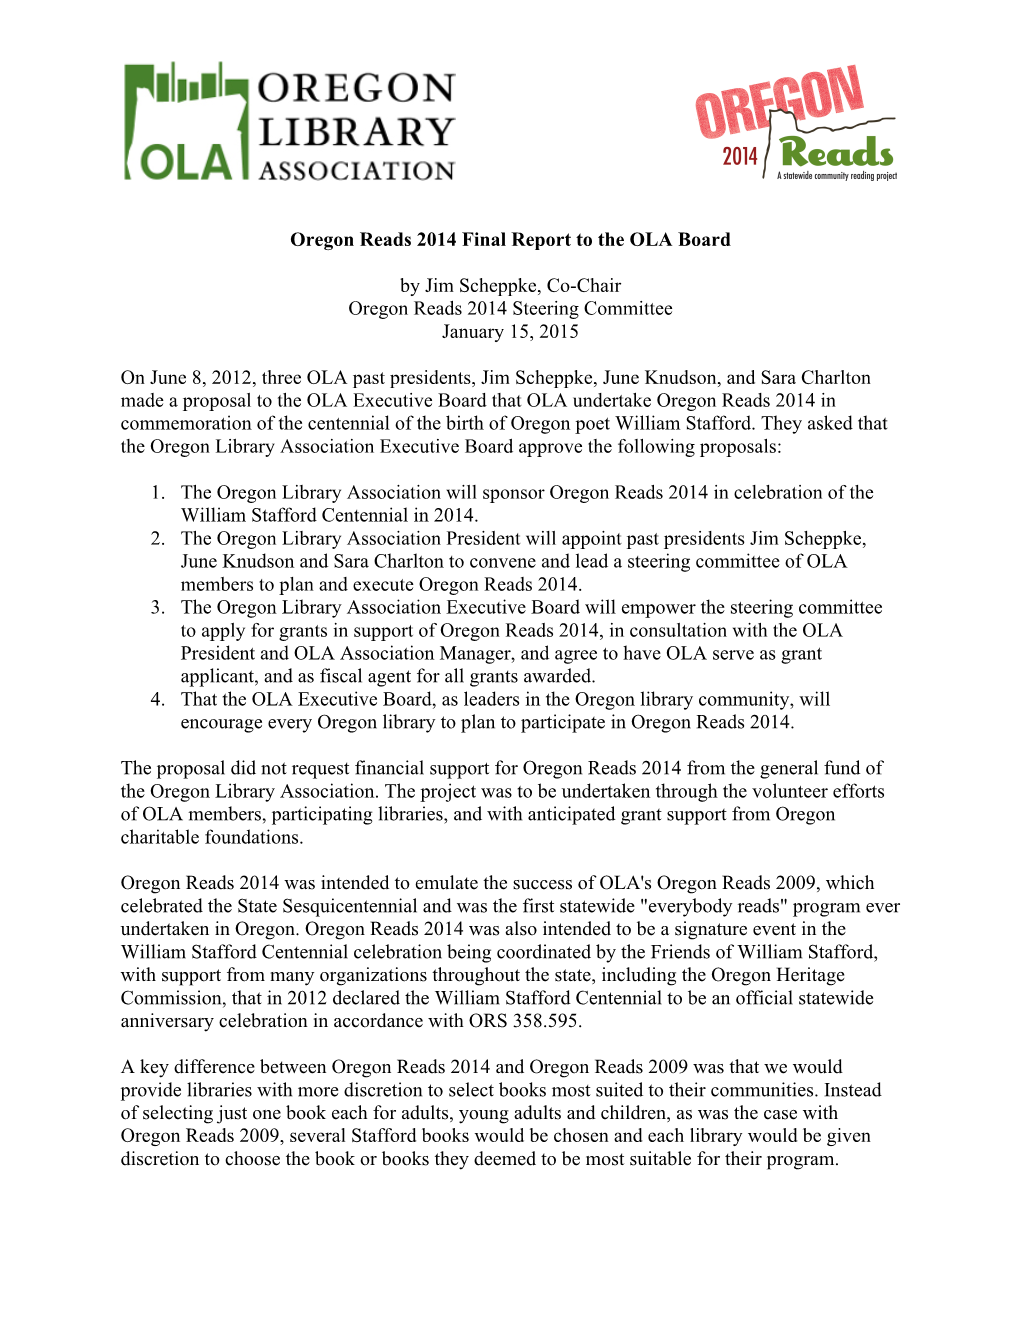 Oregon Reads 2014 Final Report to the OLA Board by Jim Scheppke